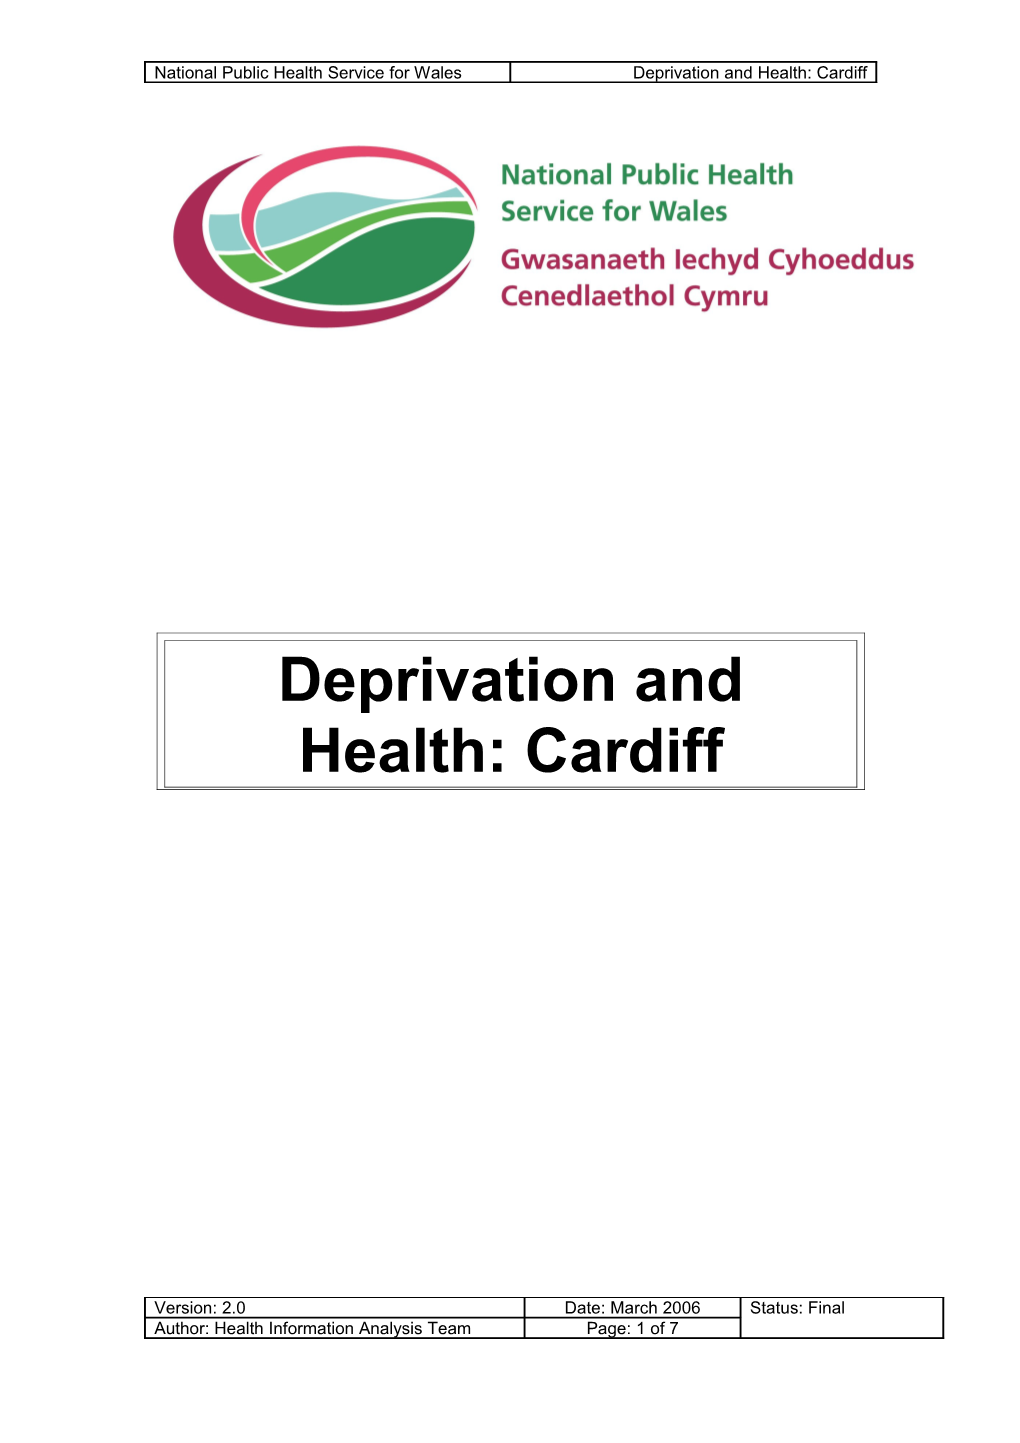 Deprivation & Health: Cardiff